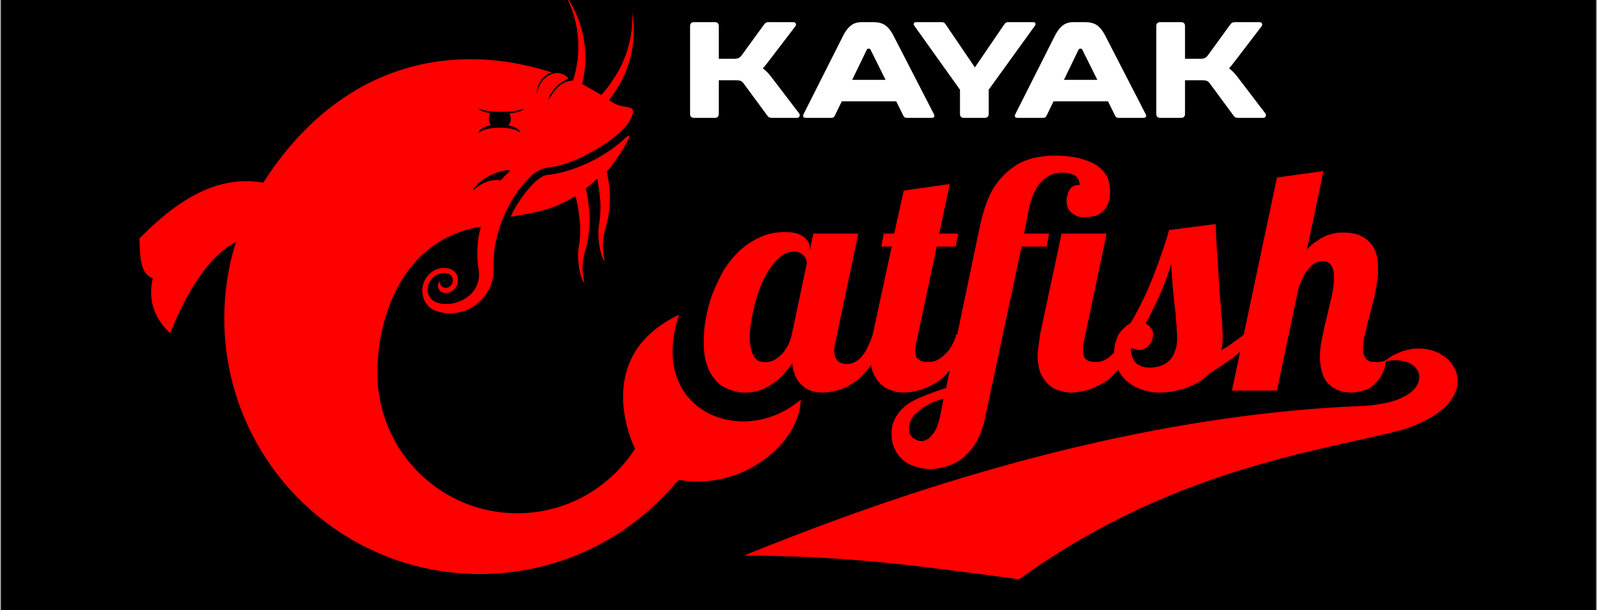 Knocker Rig: One Year Update - Kayak Catfish